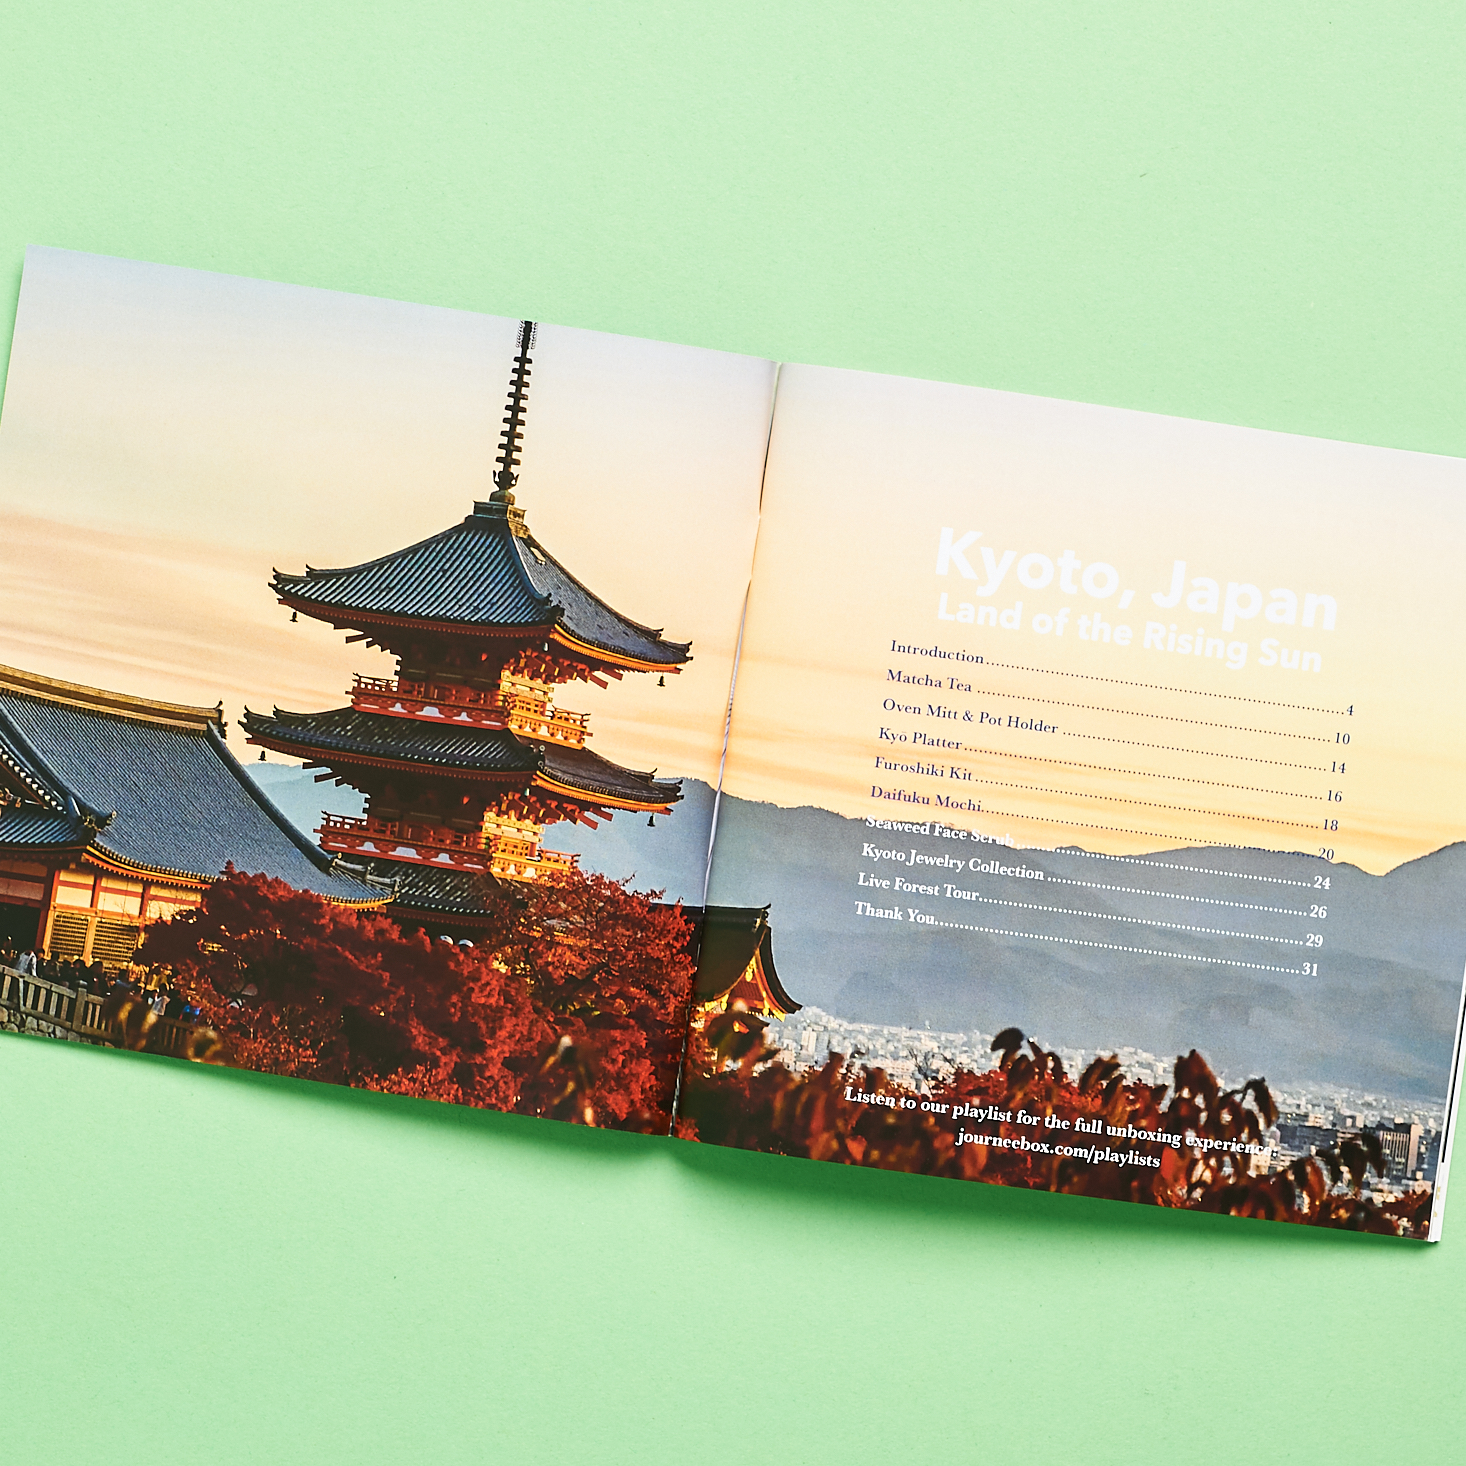 Items list inside Journee Box Kyoto booklet